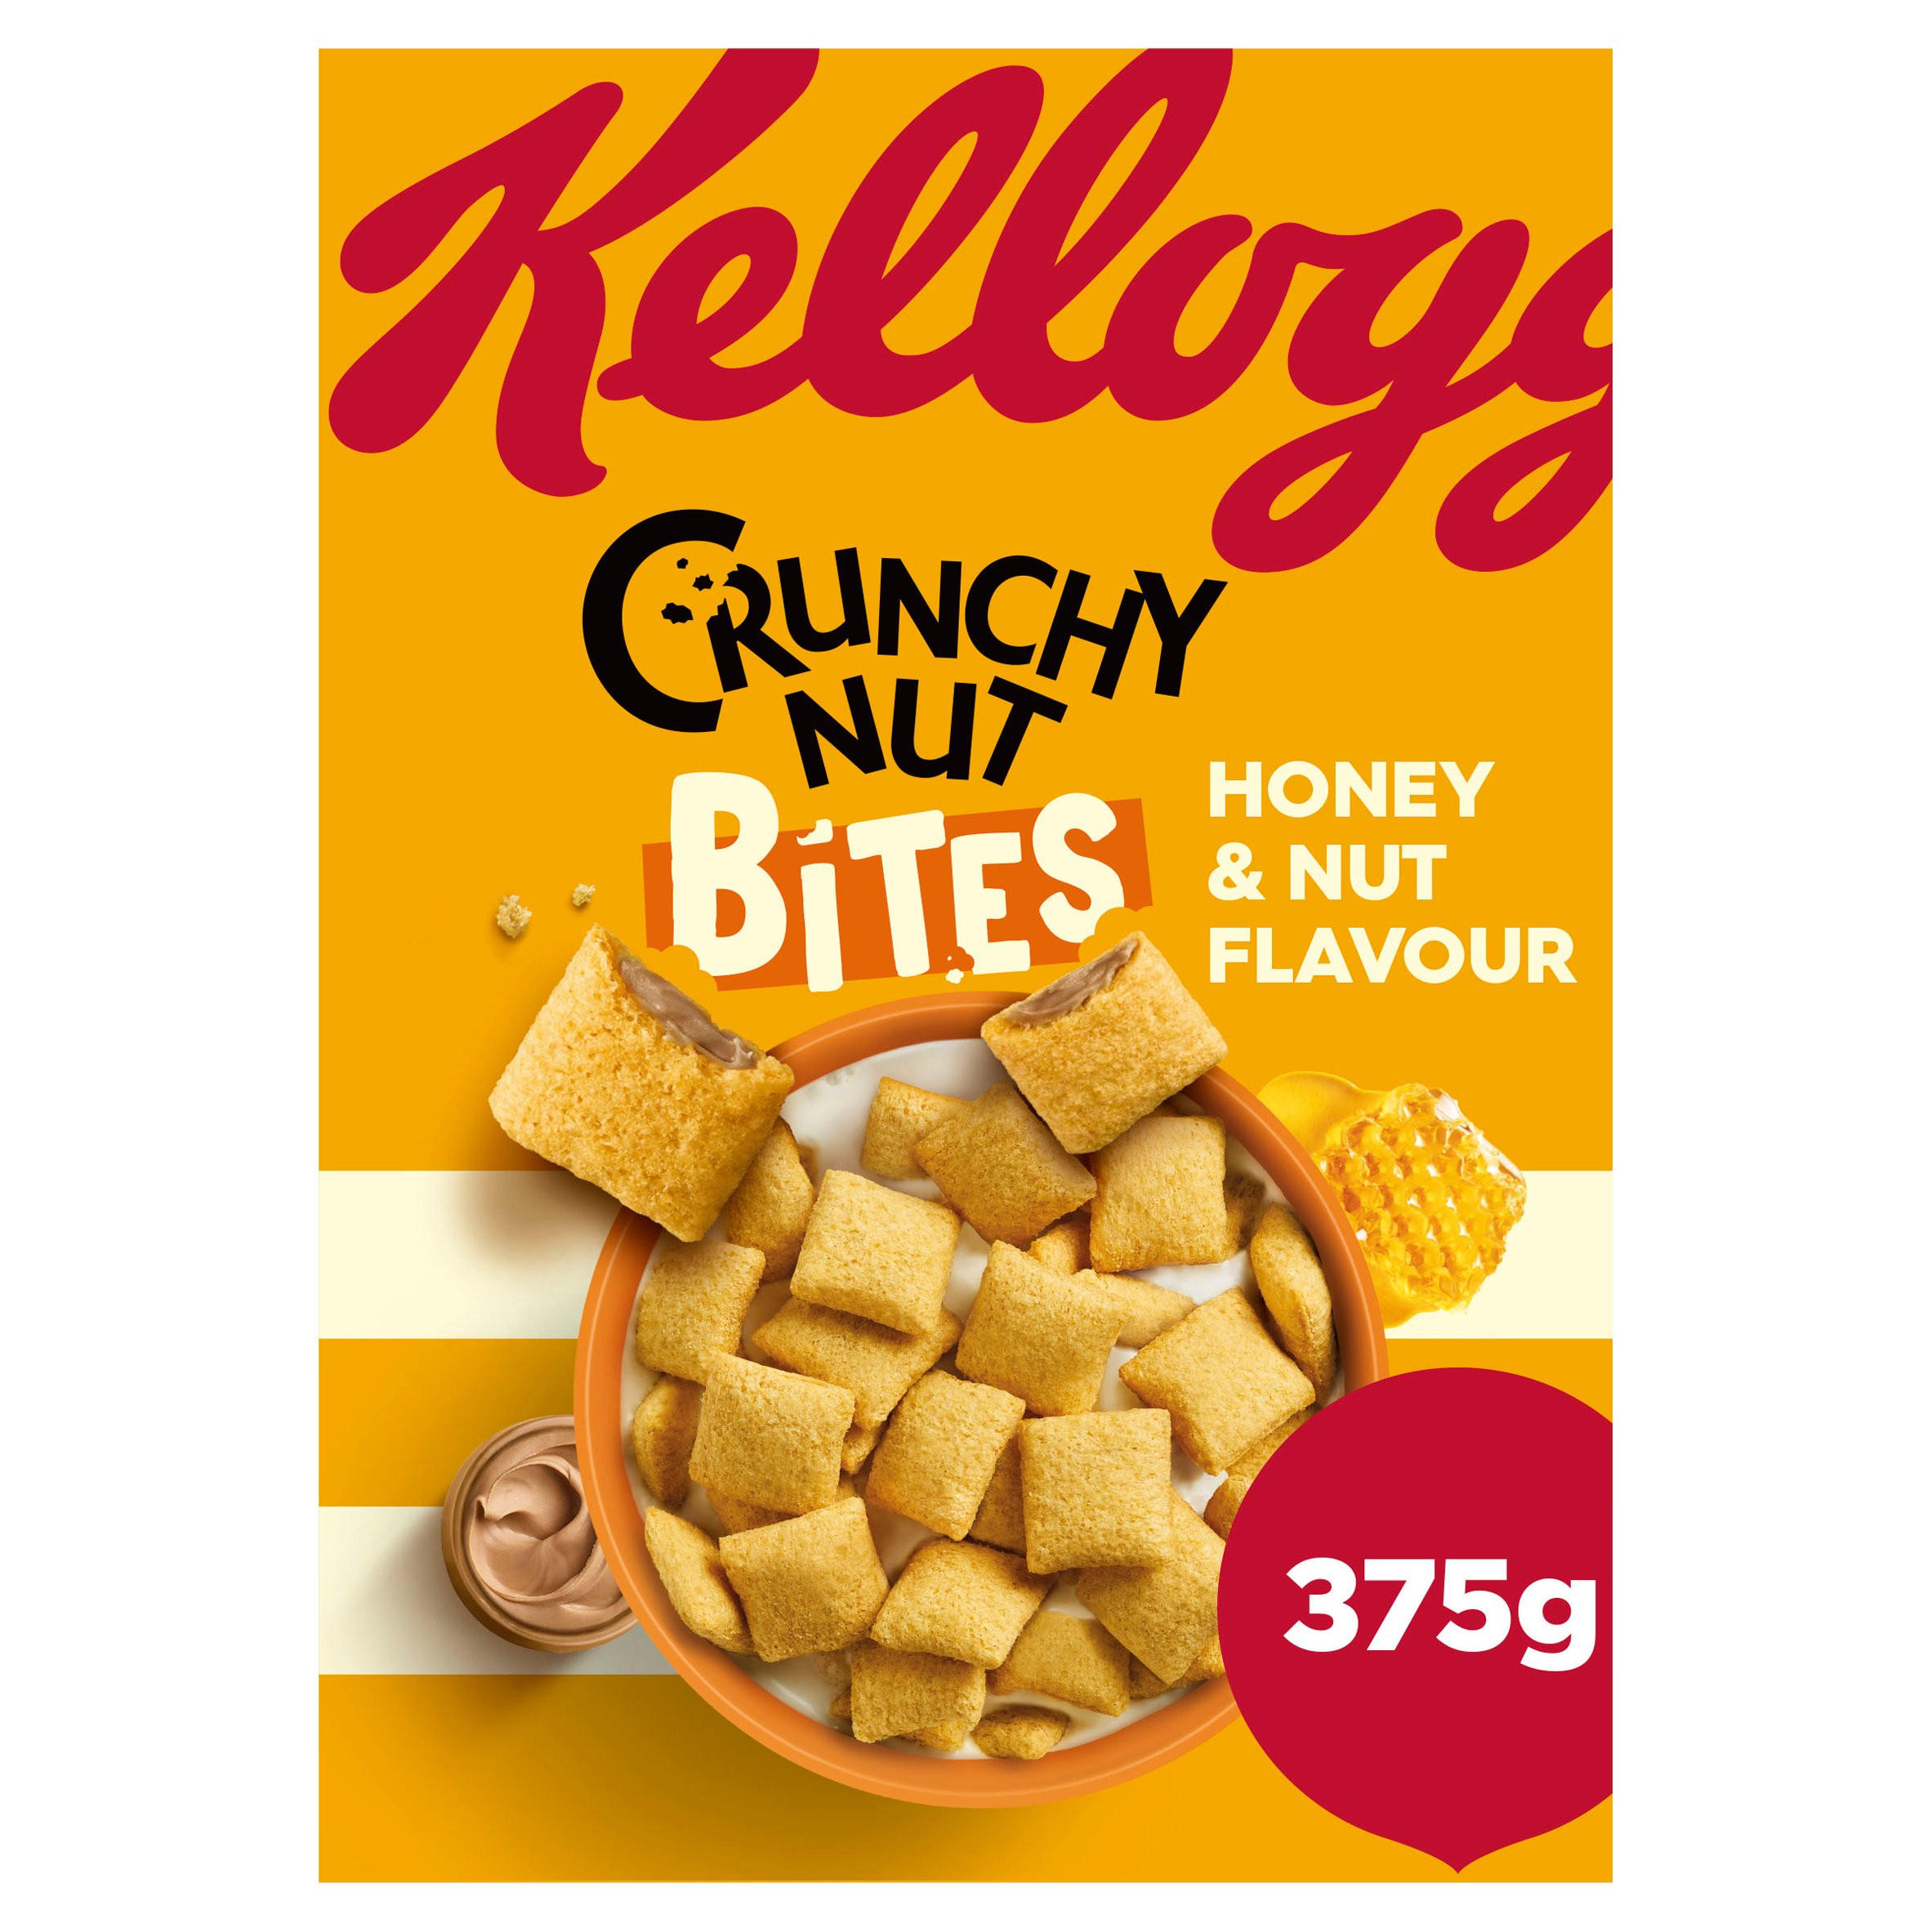 Kellogg's Crunchy Nut Bites Honey & Nut Flavour Breakfast Cereal 375g, Kellogg's Cereal